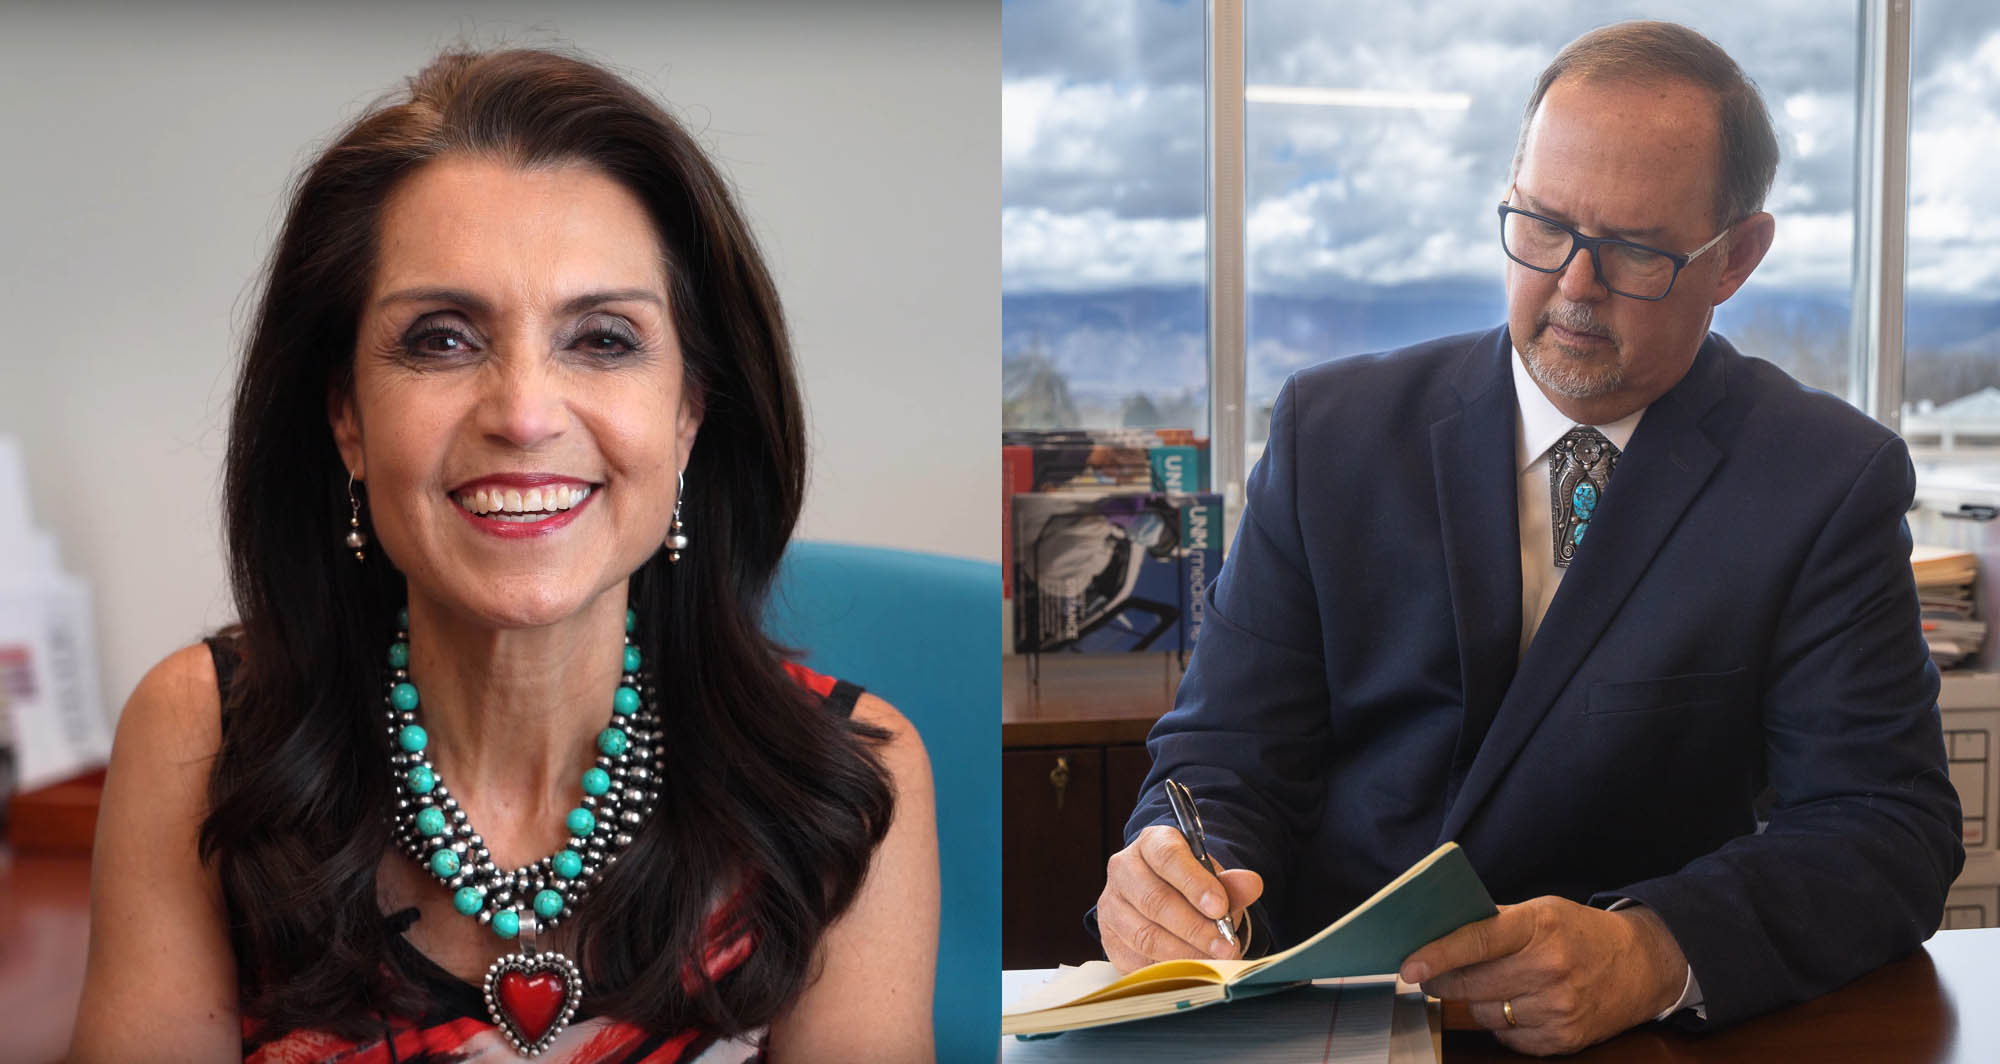 Dr. Valerie Romero-Leggott and Dr. Douglas Ziedonis